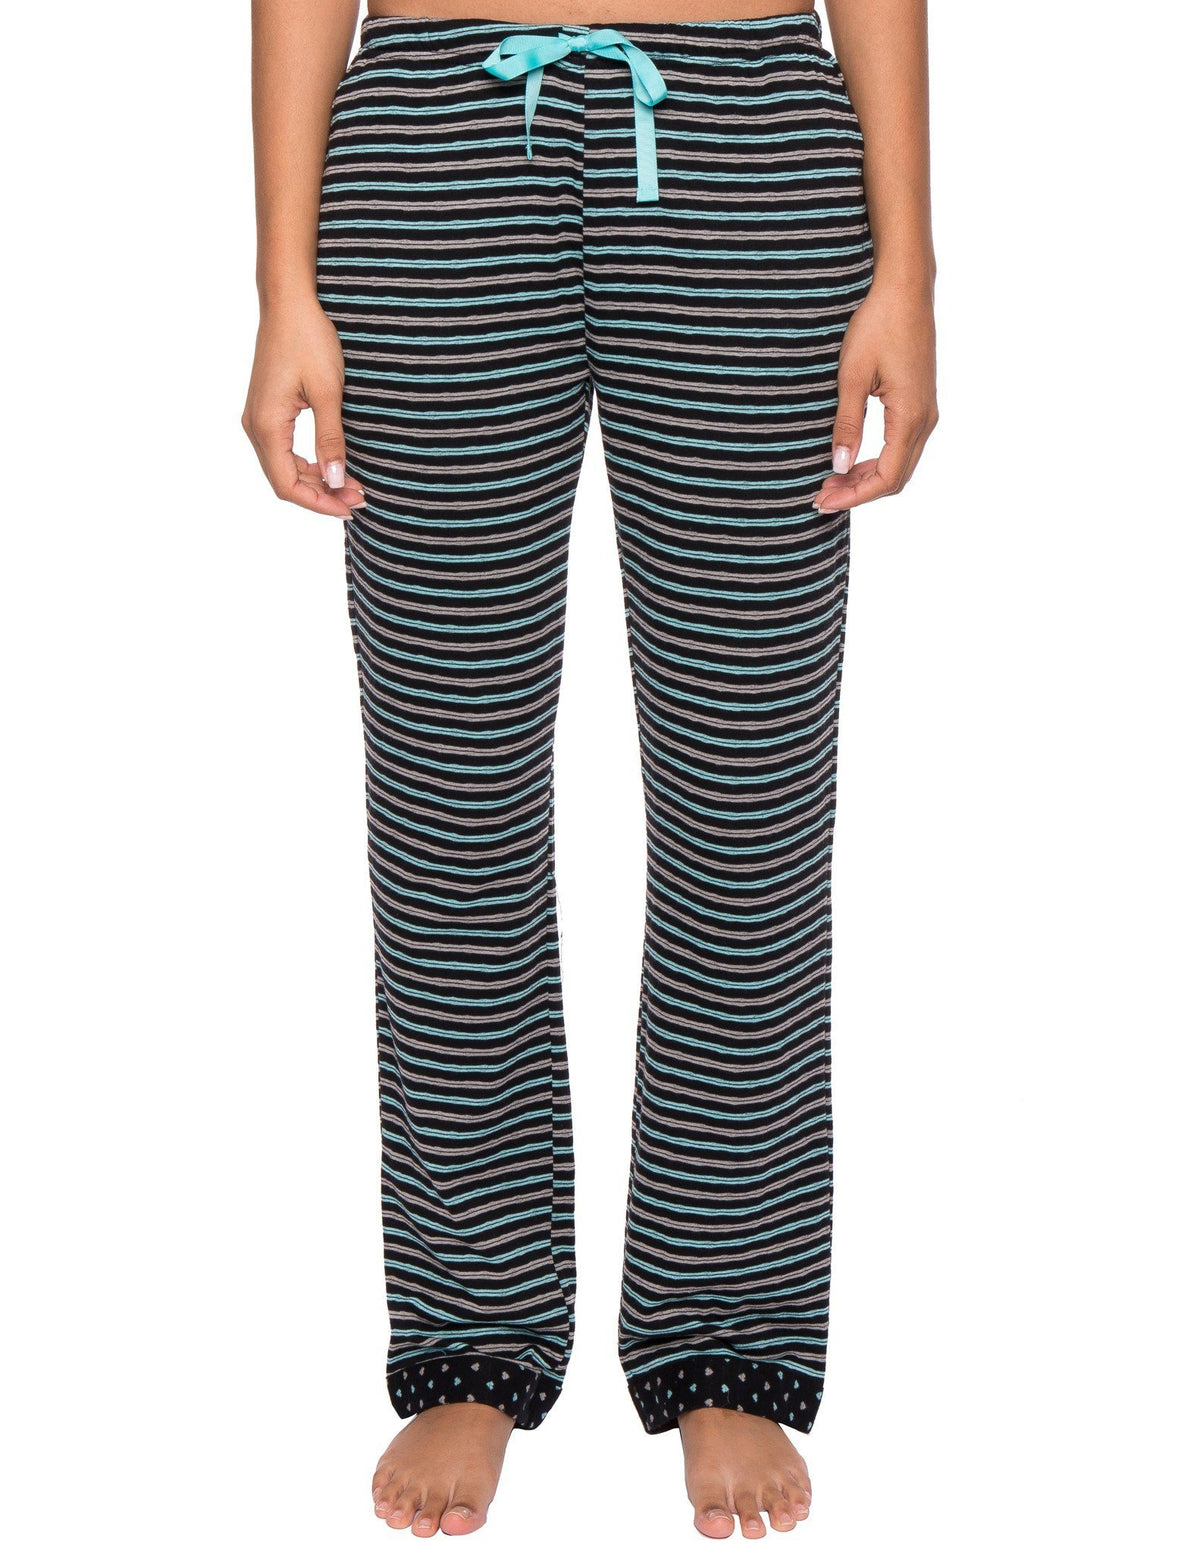 Women's Double Layer Knit Jersey Lounge Pants - Stripes Black/Aqua